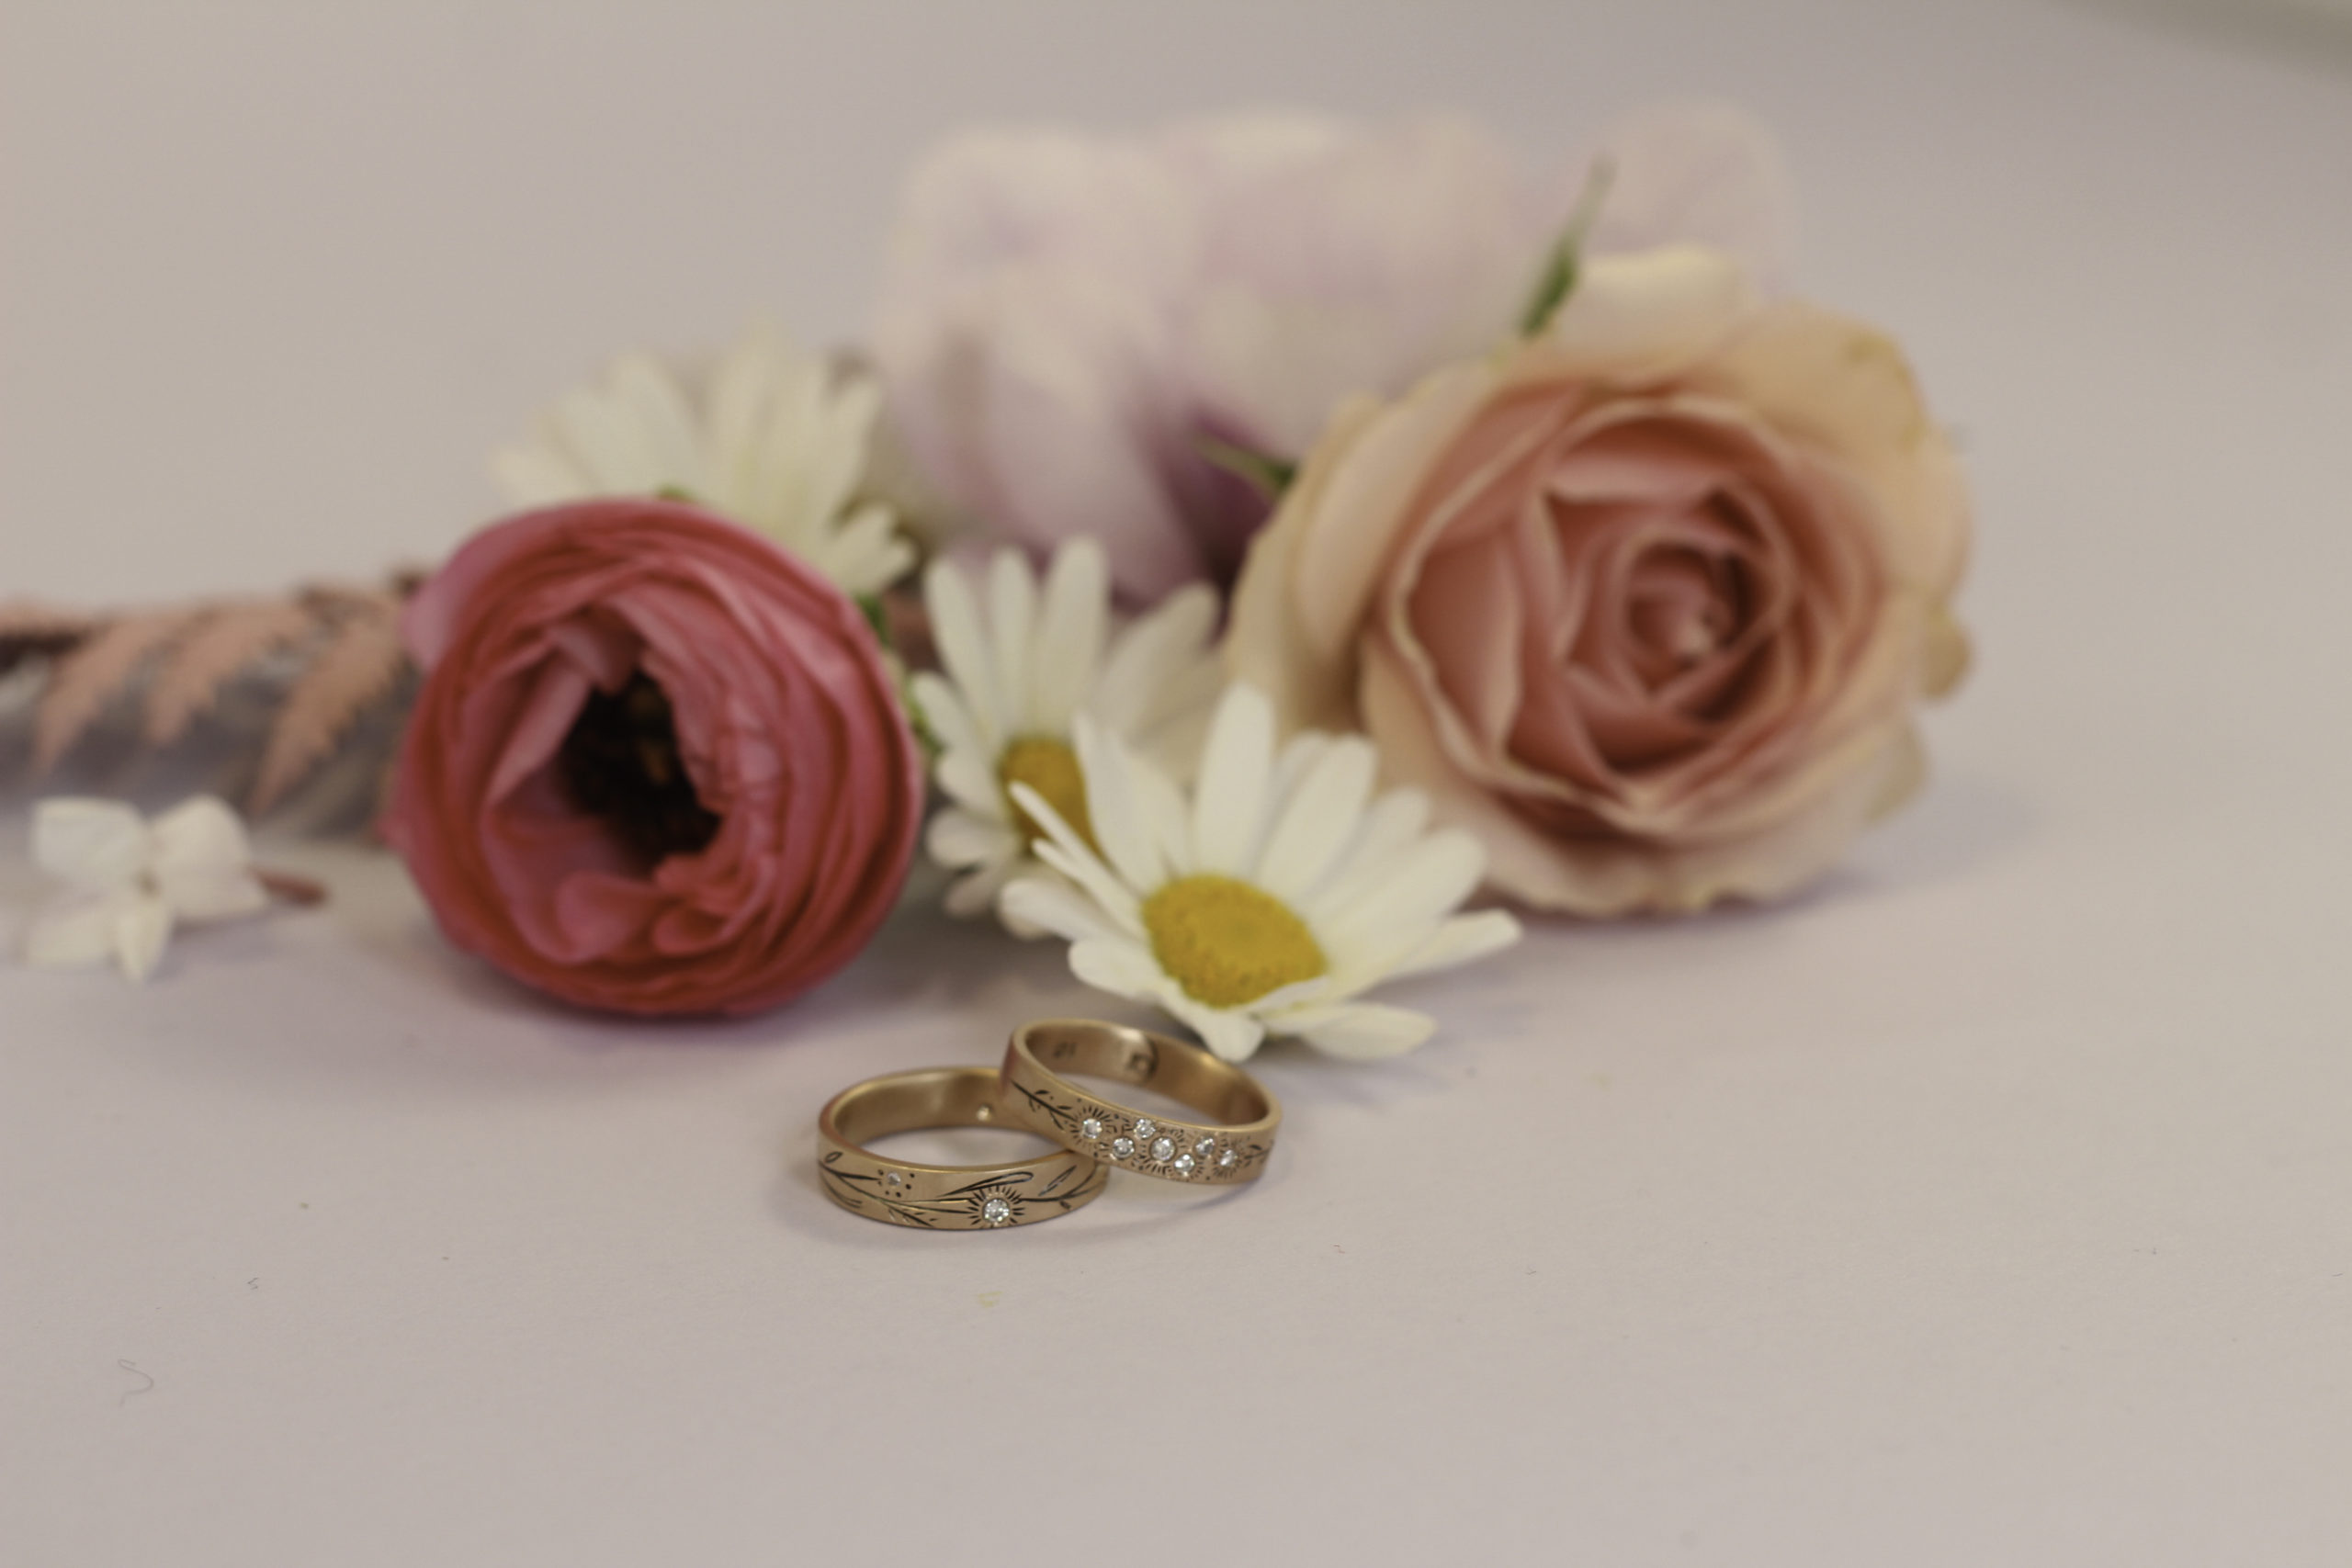 Two rings set down near flowers.